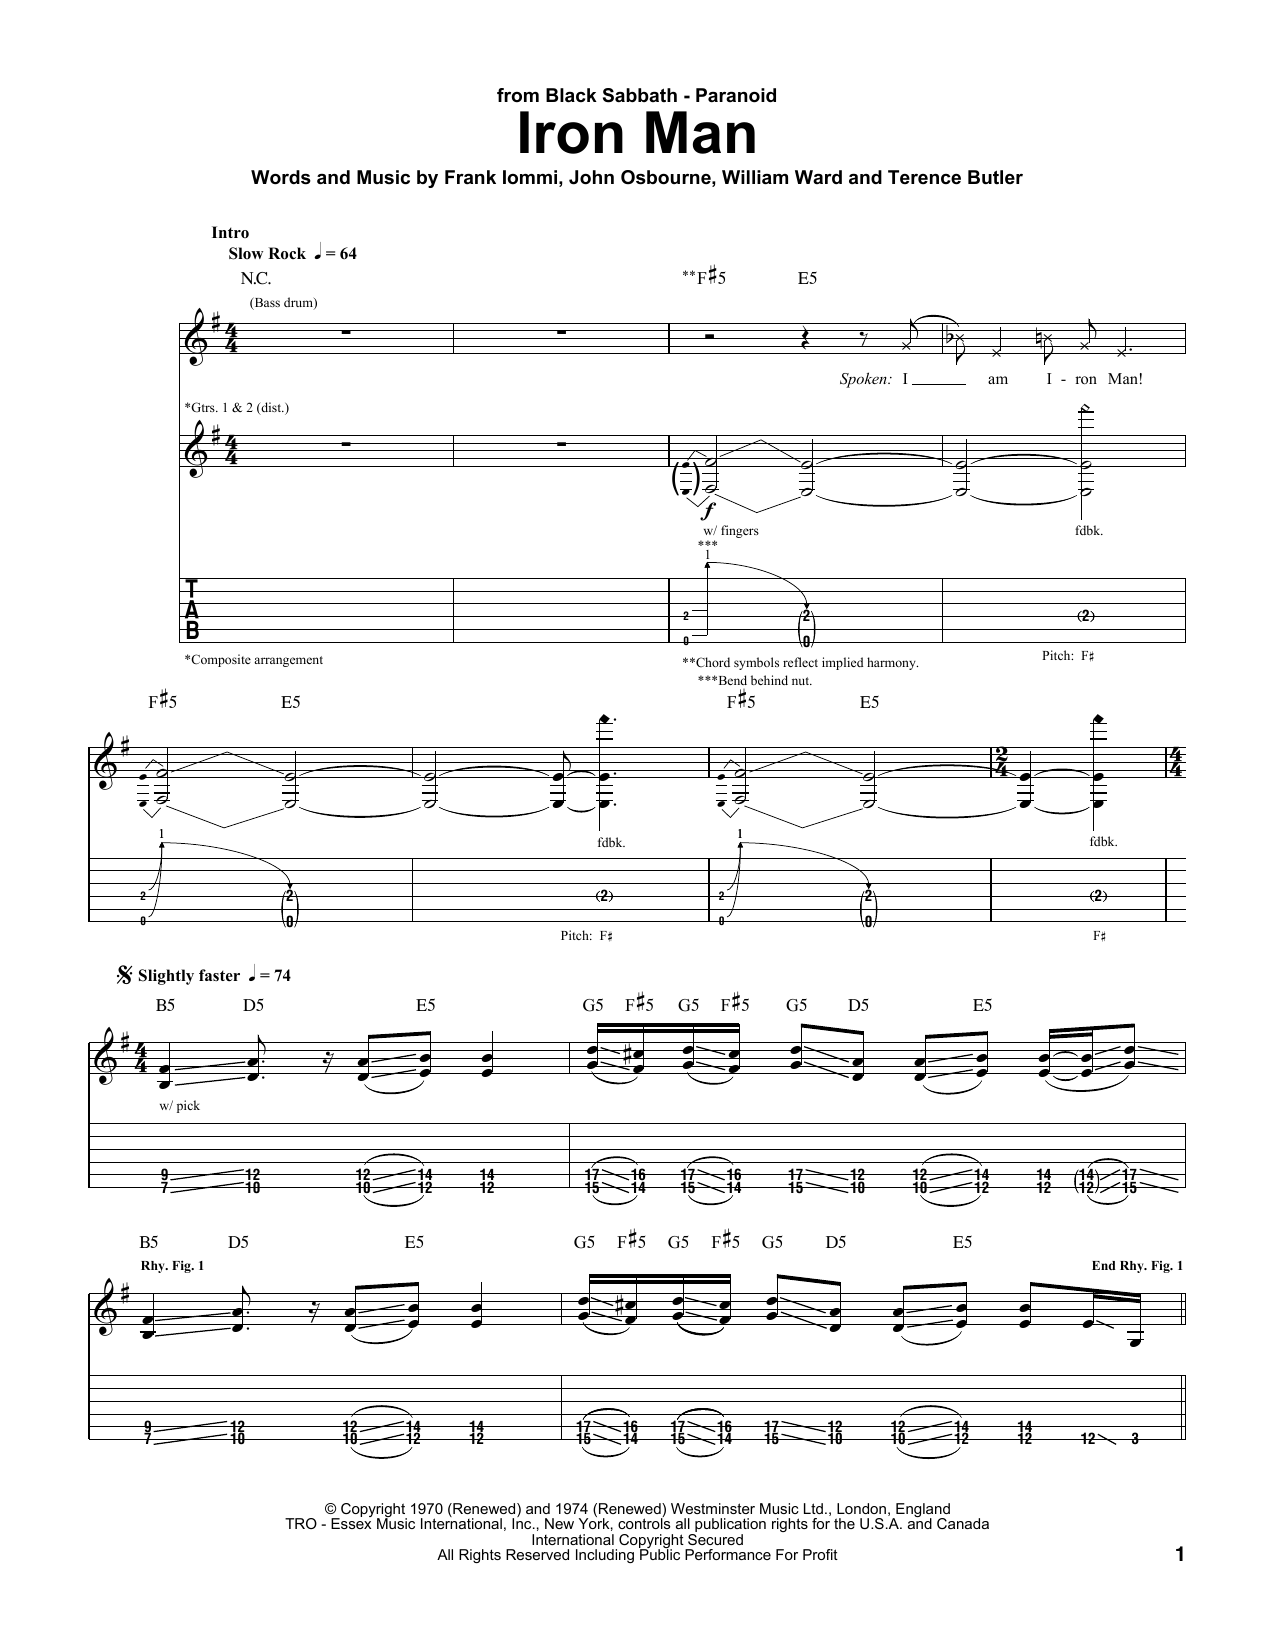 Black Sabbath Iron Man sheet music notes and chords arranged for Guitar Tab (Single Guitar)